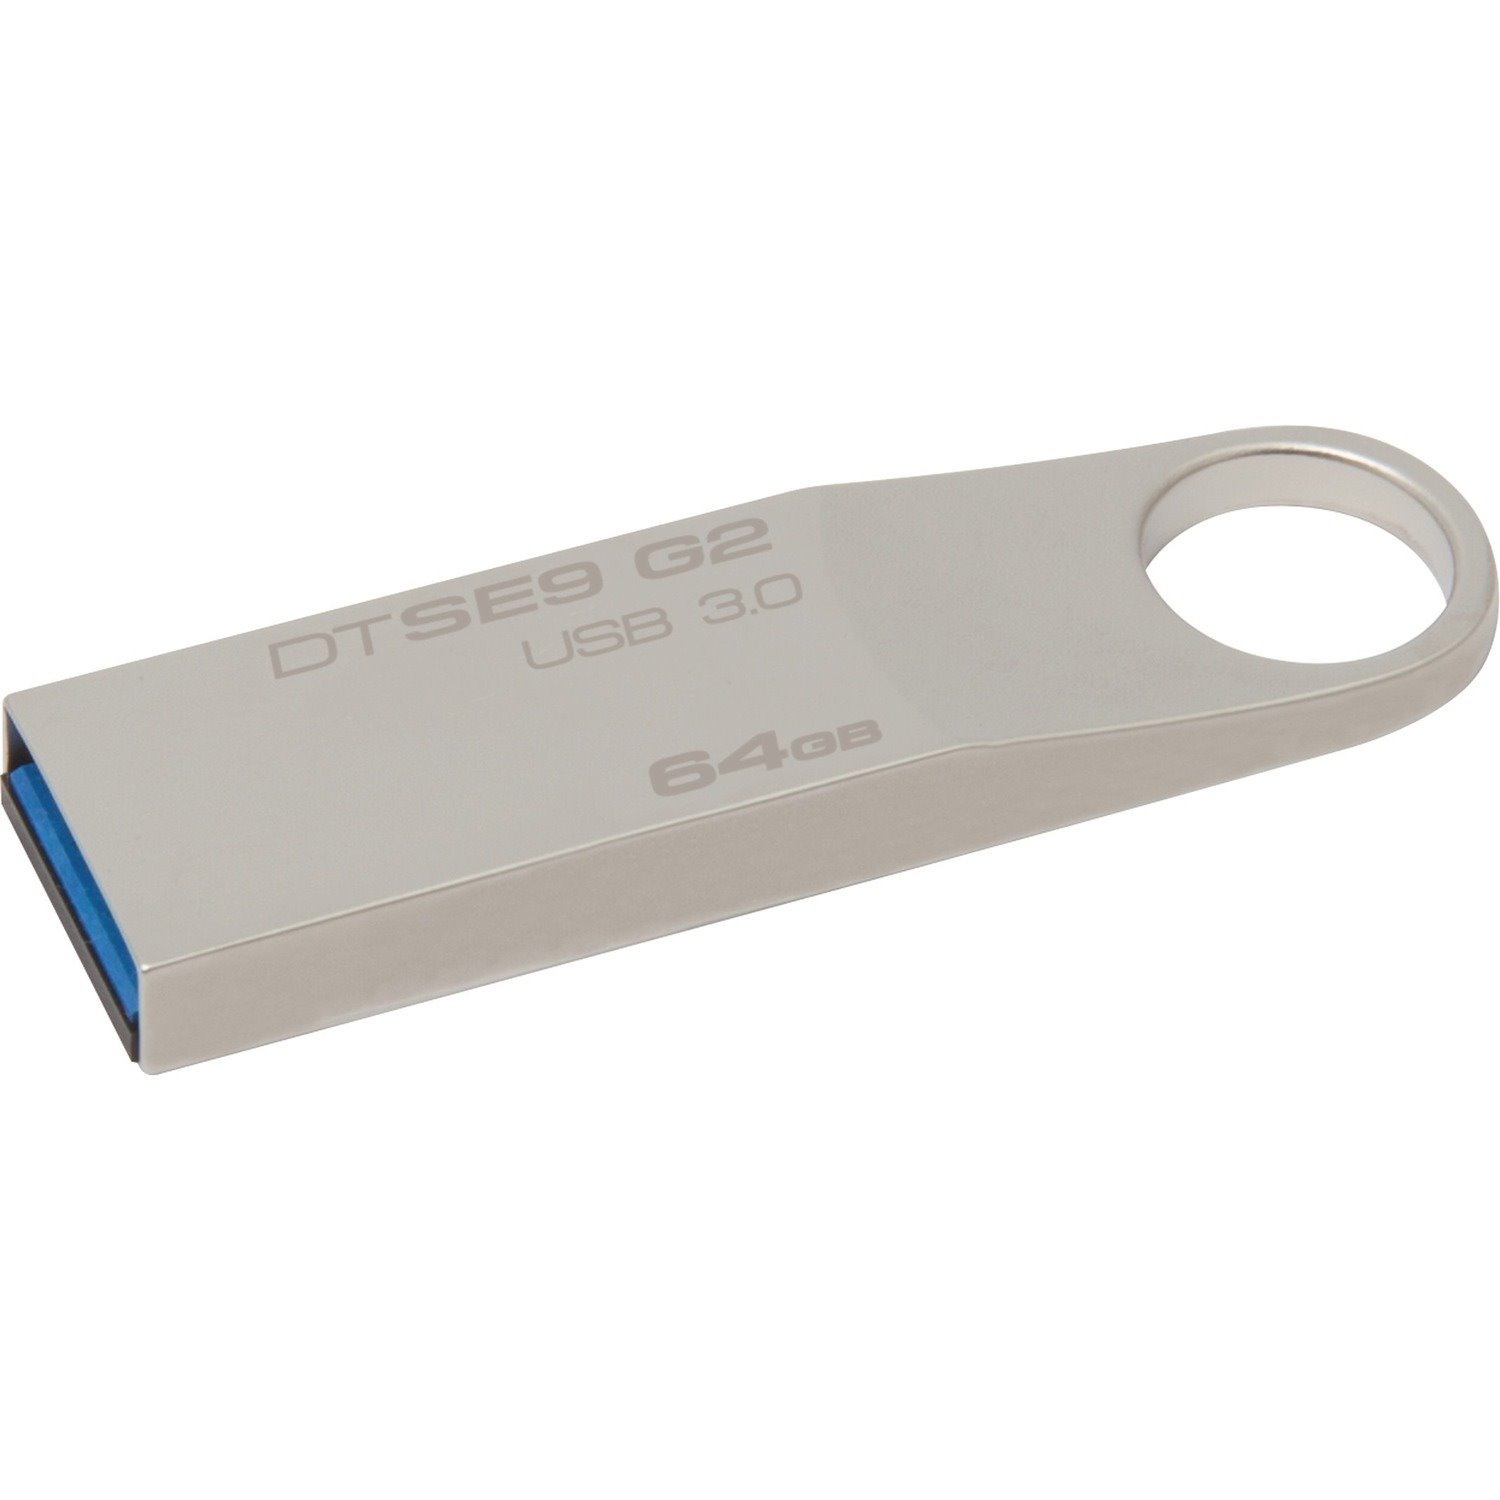 Kingston DataTraveler SE9 G2 64 GB USB 3.0 Flash Drive - Silver